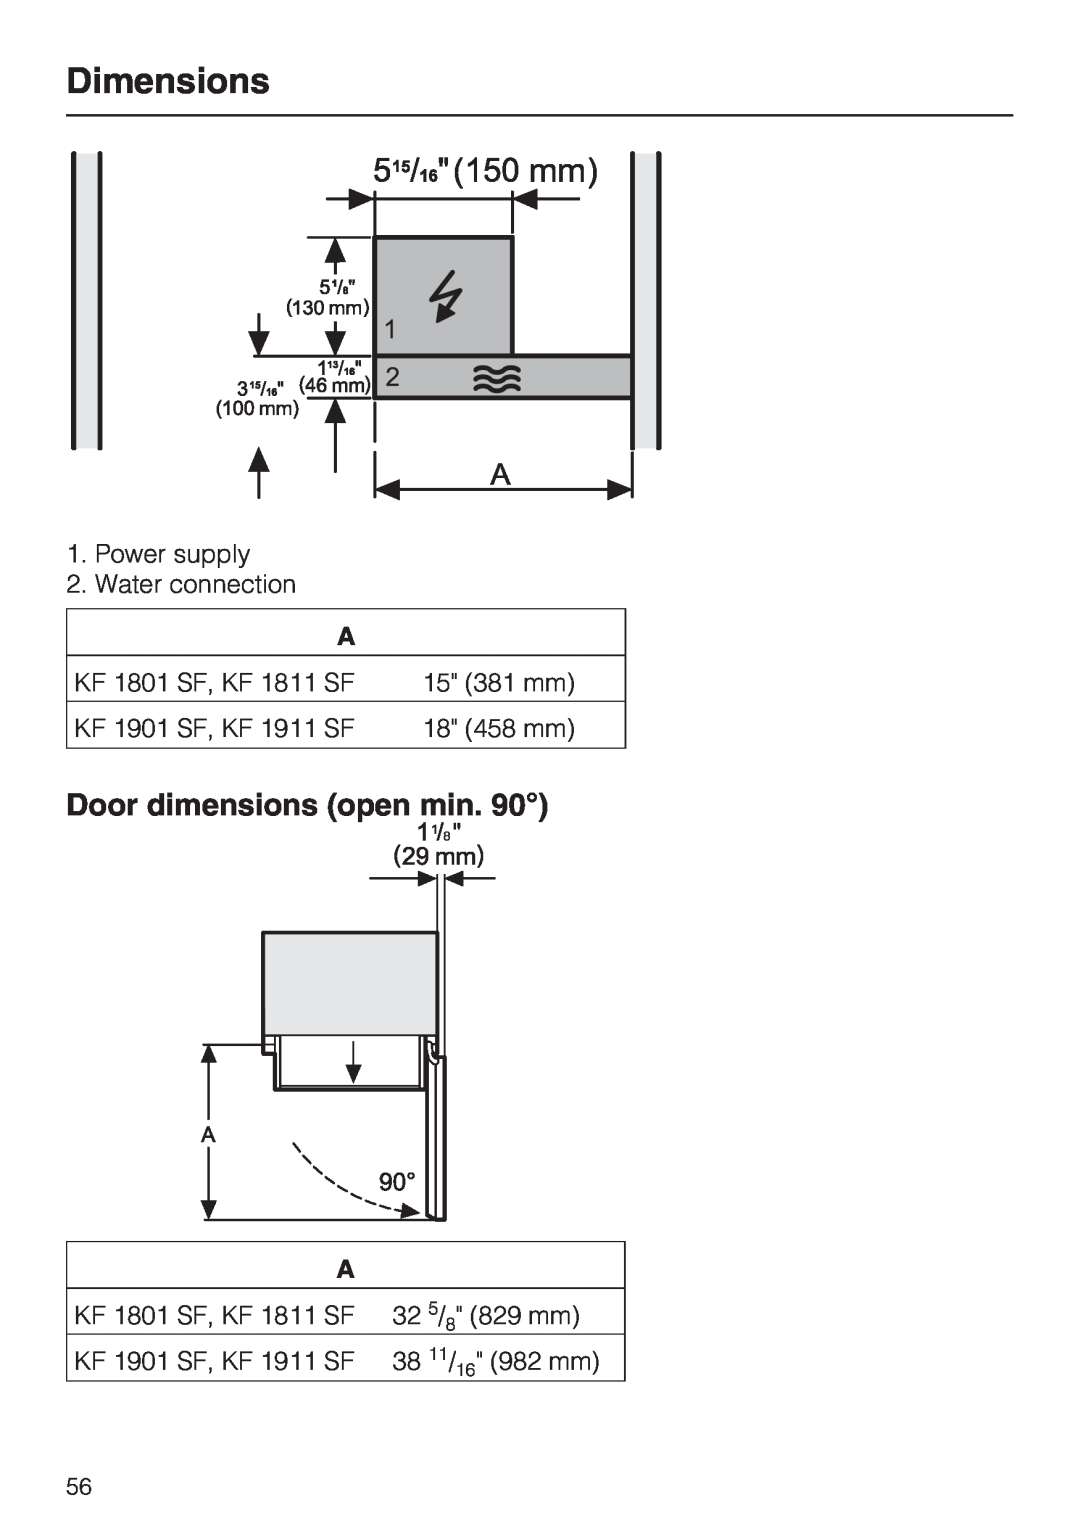 Miele KF1811SF, KF1901SF, KF1801SF, KF1911SF installation instructions Door dimensions open min, Dimensions 